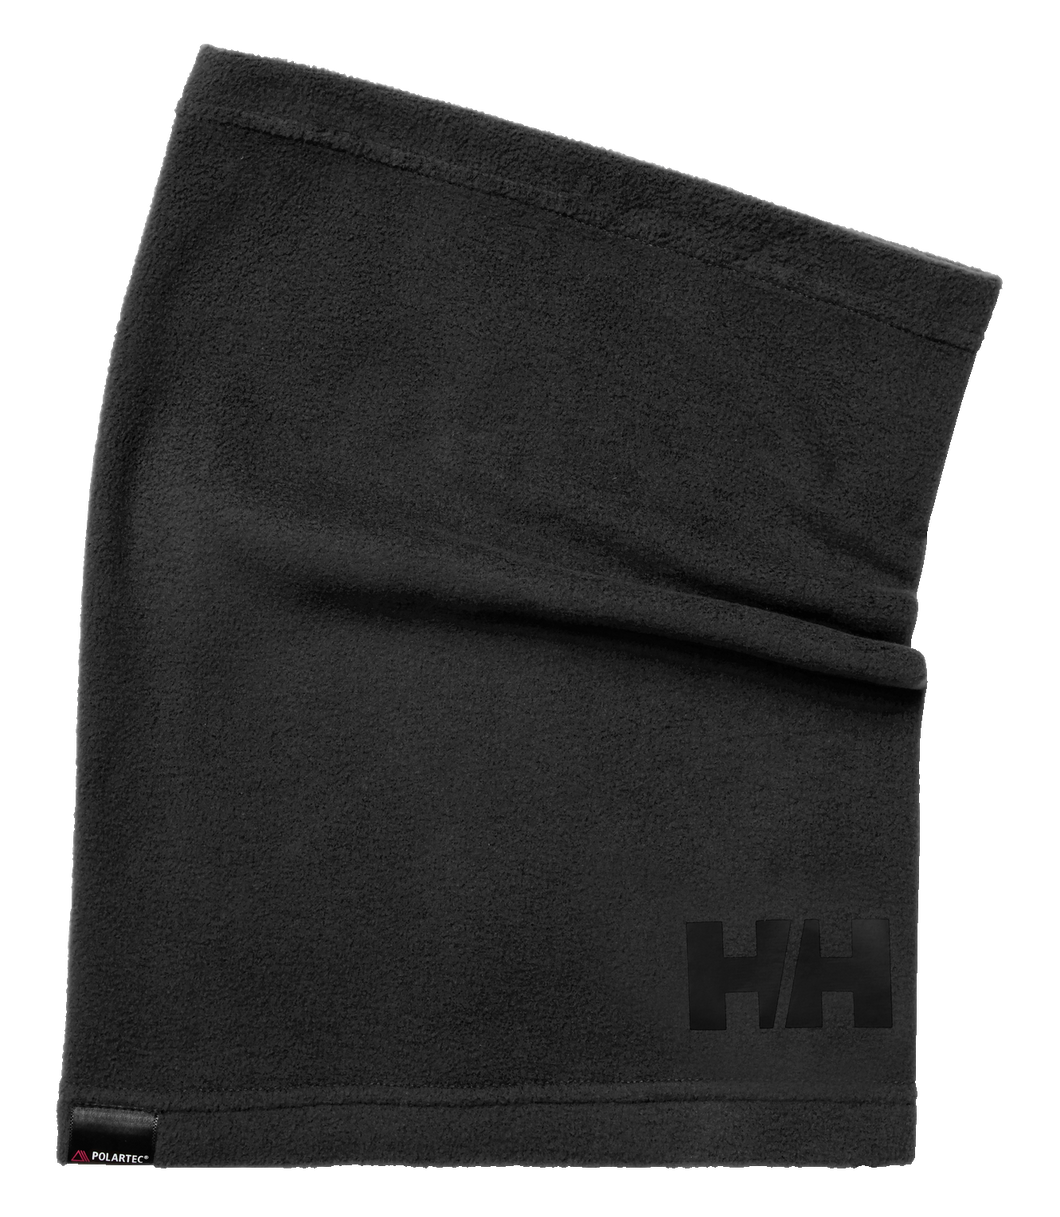 Helly Hansen Unisex Polartec Fleece Neck Gaiter (Black)